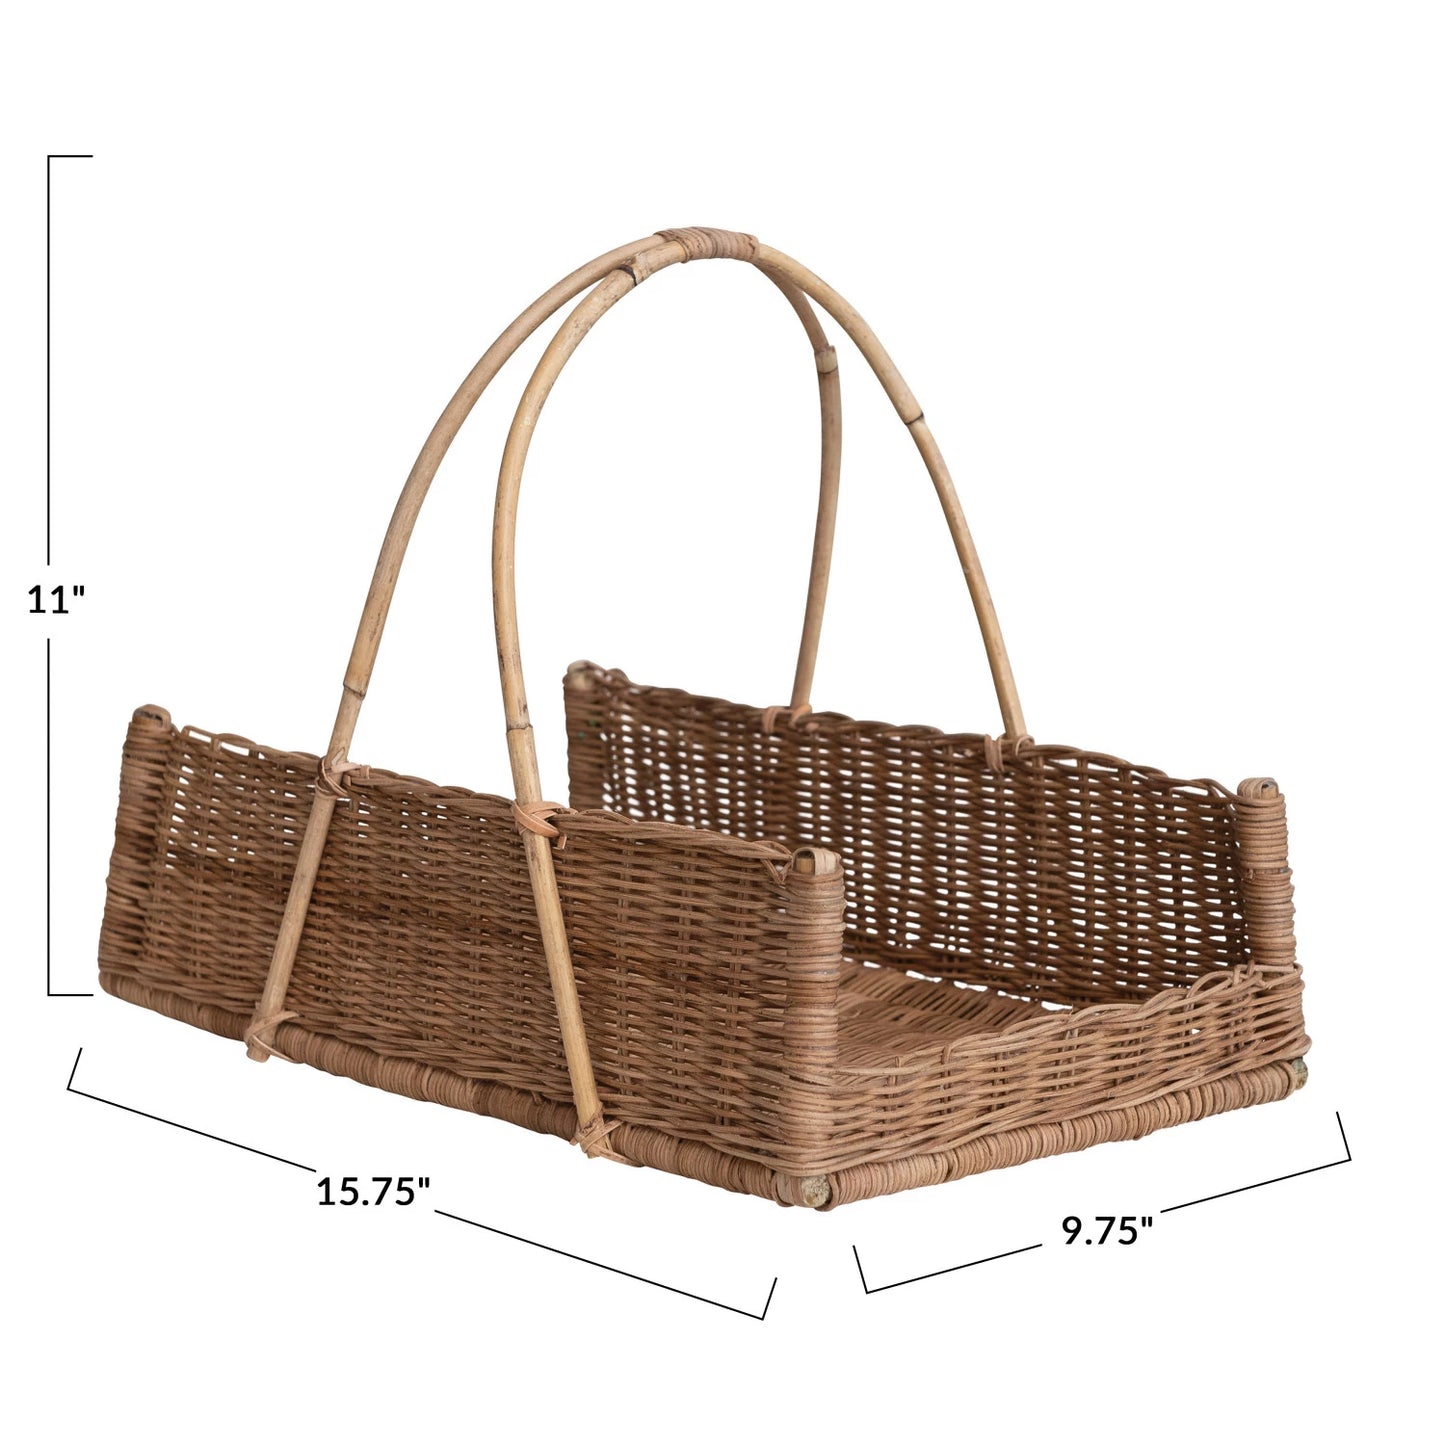 Hand-Woven Rattan Basket w/ Handle, Natural